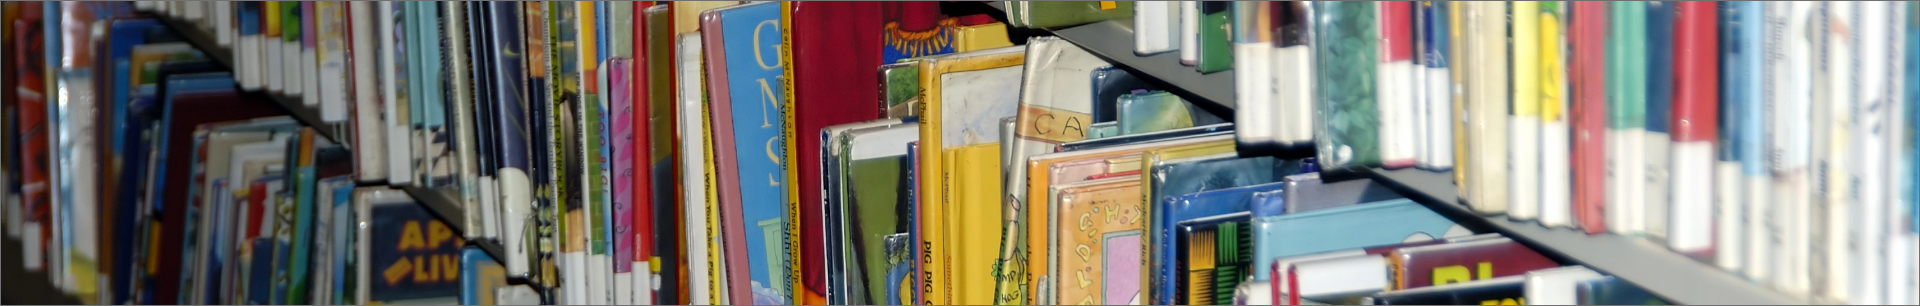 A closeup of a public library shelf full of books.